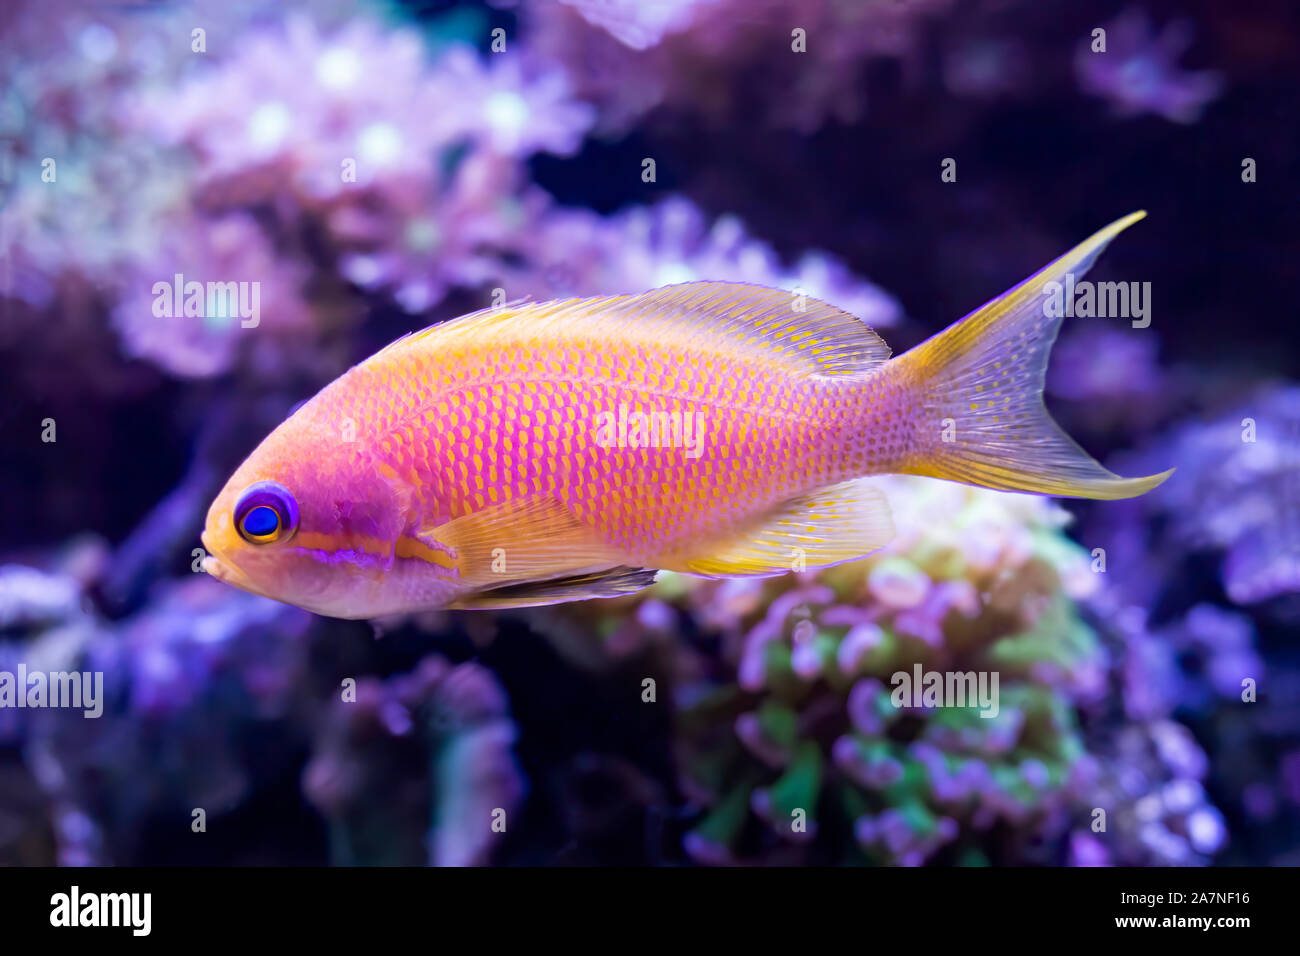 Closeup detail of blue eyed anthias tropical fish in aquarium with